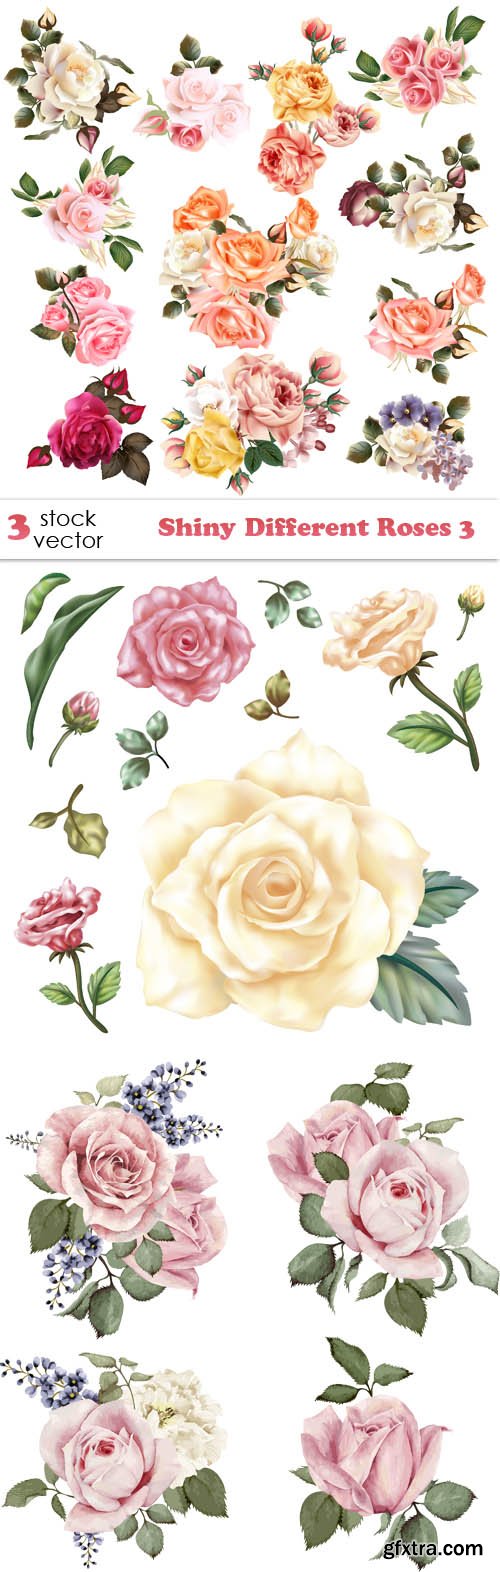 Vectors - Shiny Different Roses 3